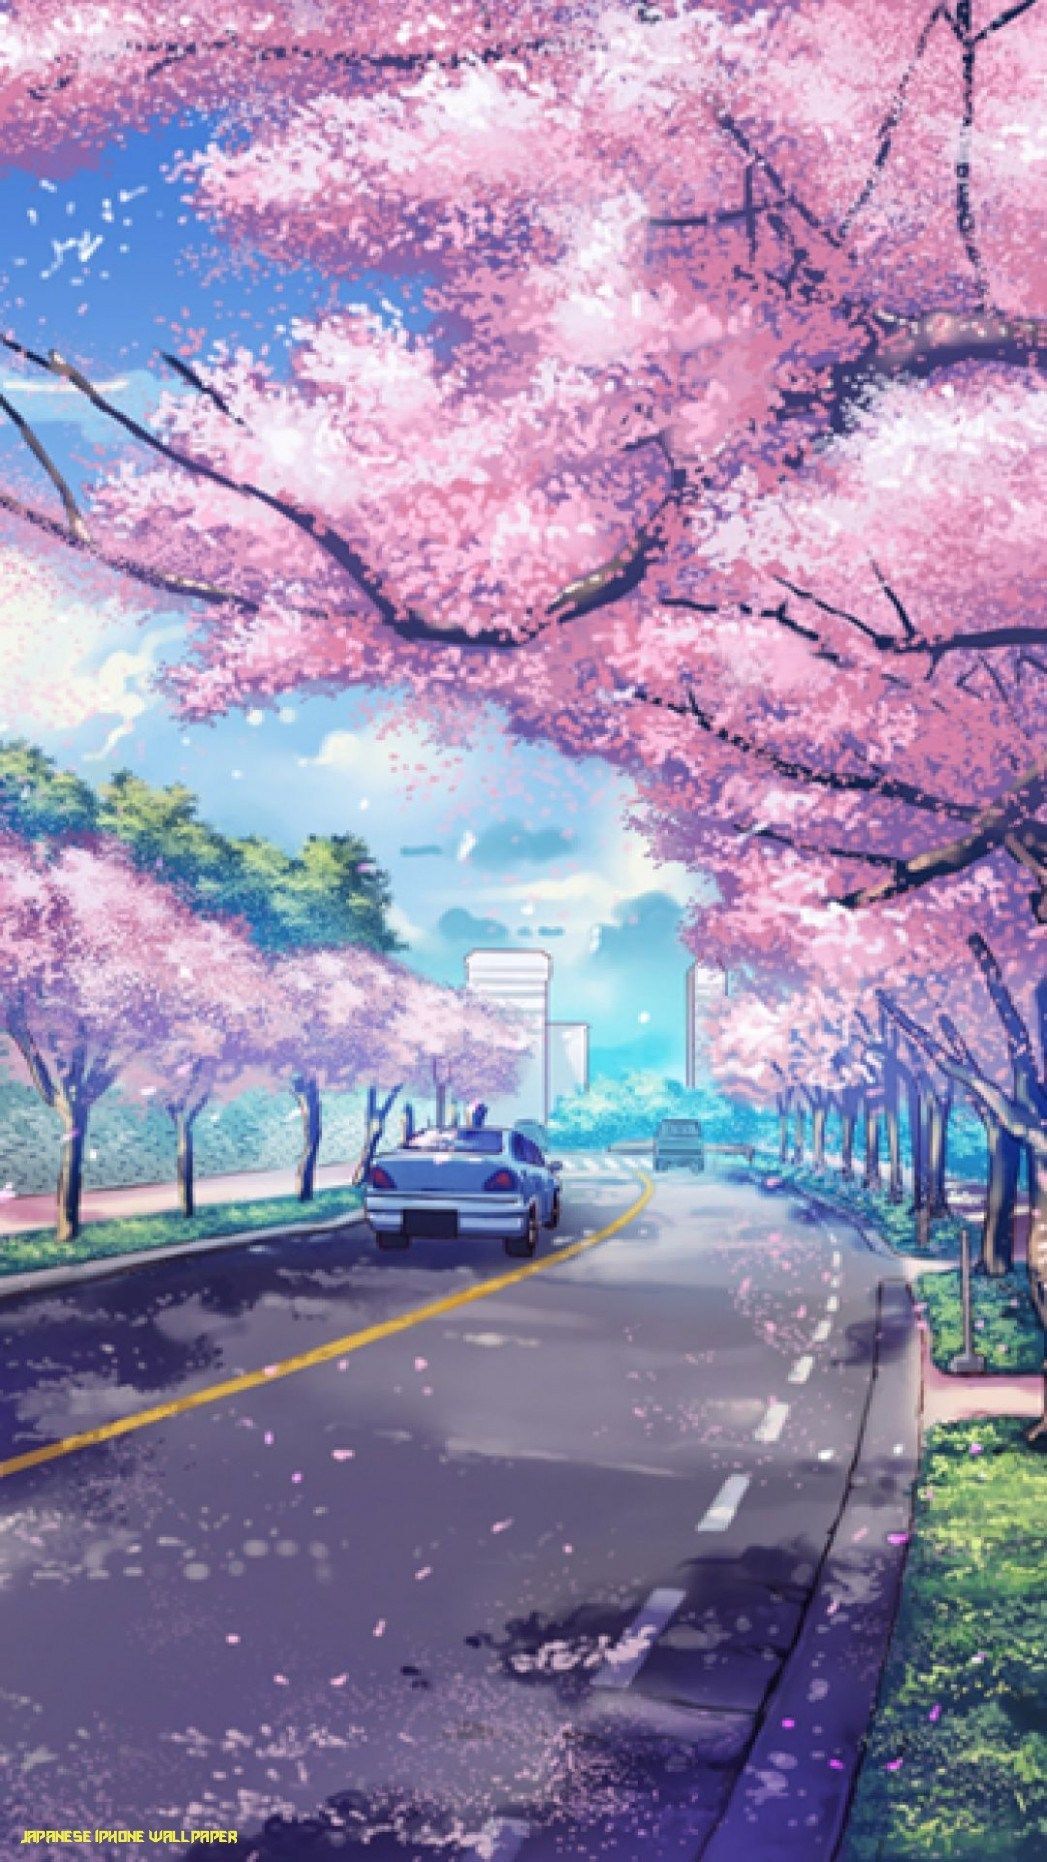 Japan Cityscape iPhone wallpaper. Anime scenery wallpaper, Anime